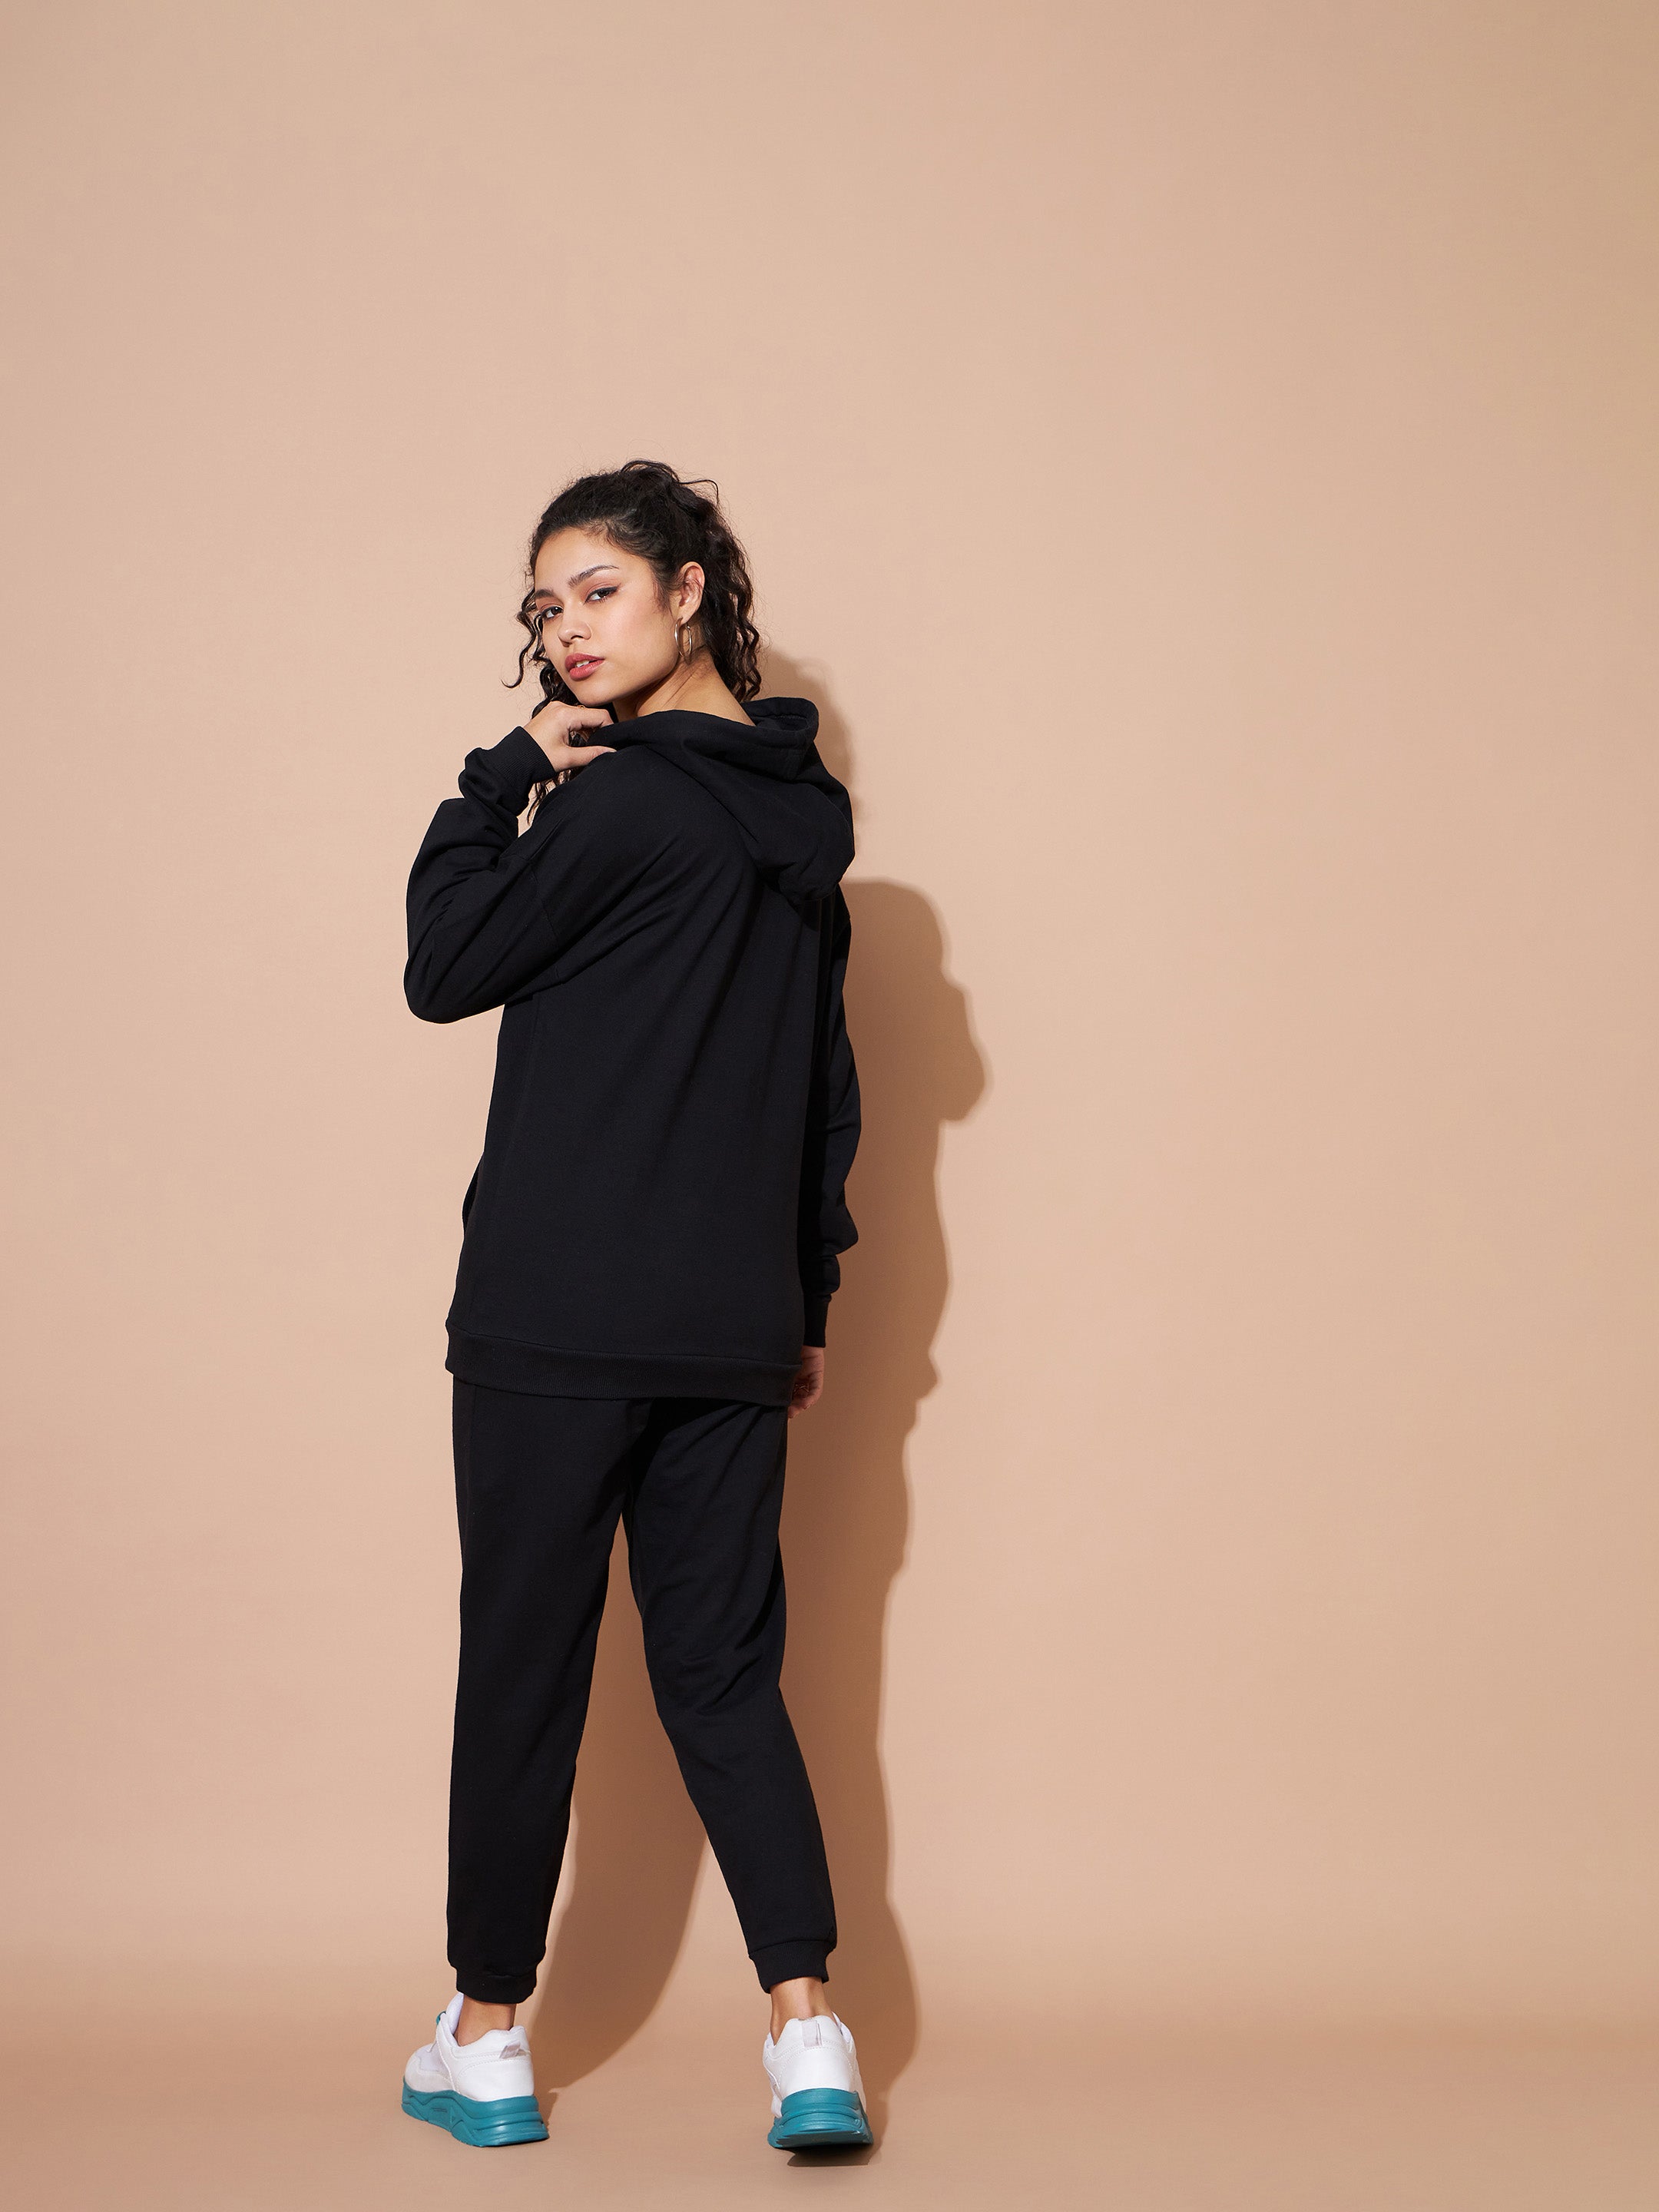 Stylish Black Solid Cotton Leggings For Women – Chandler Fashions